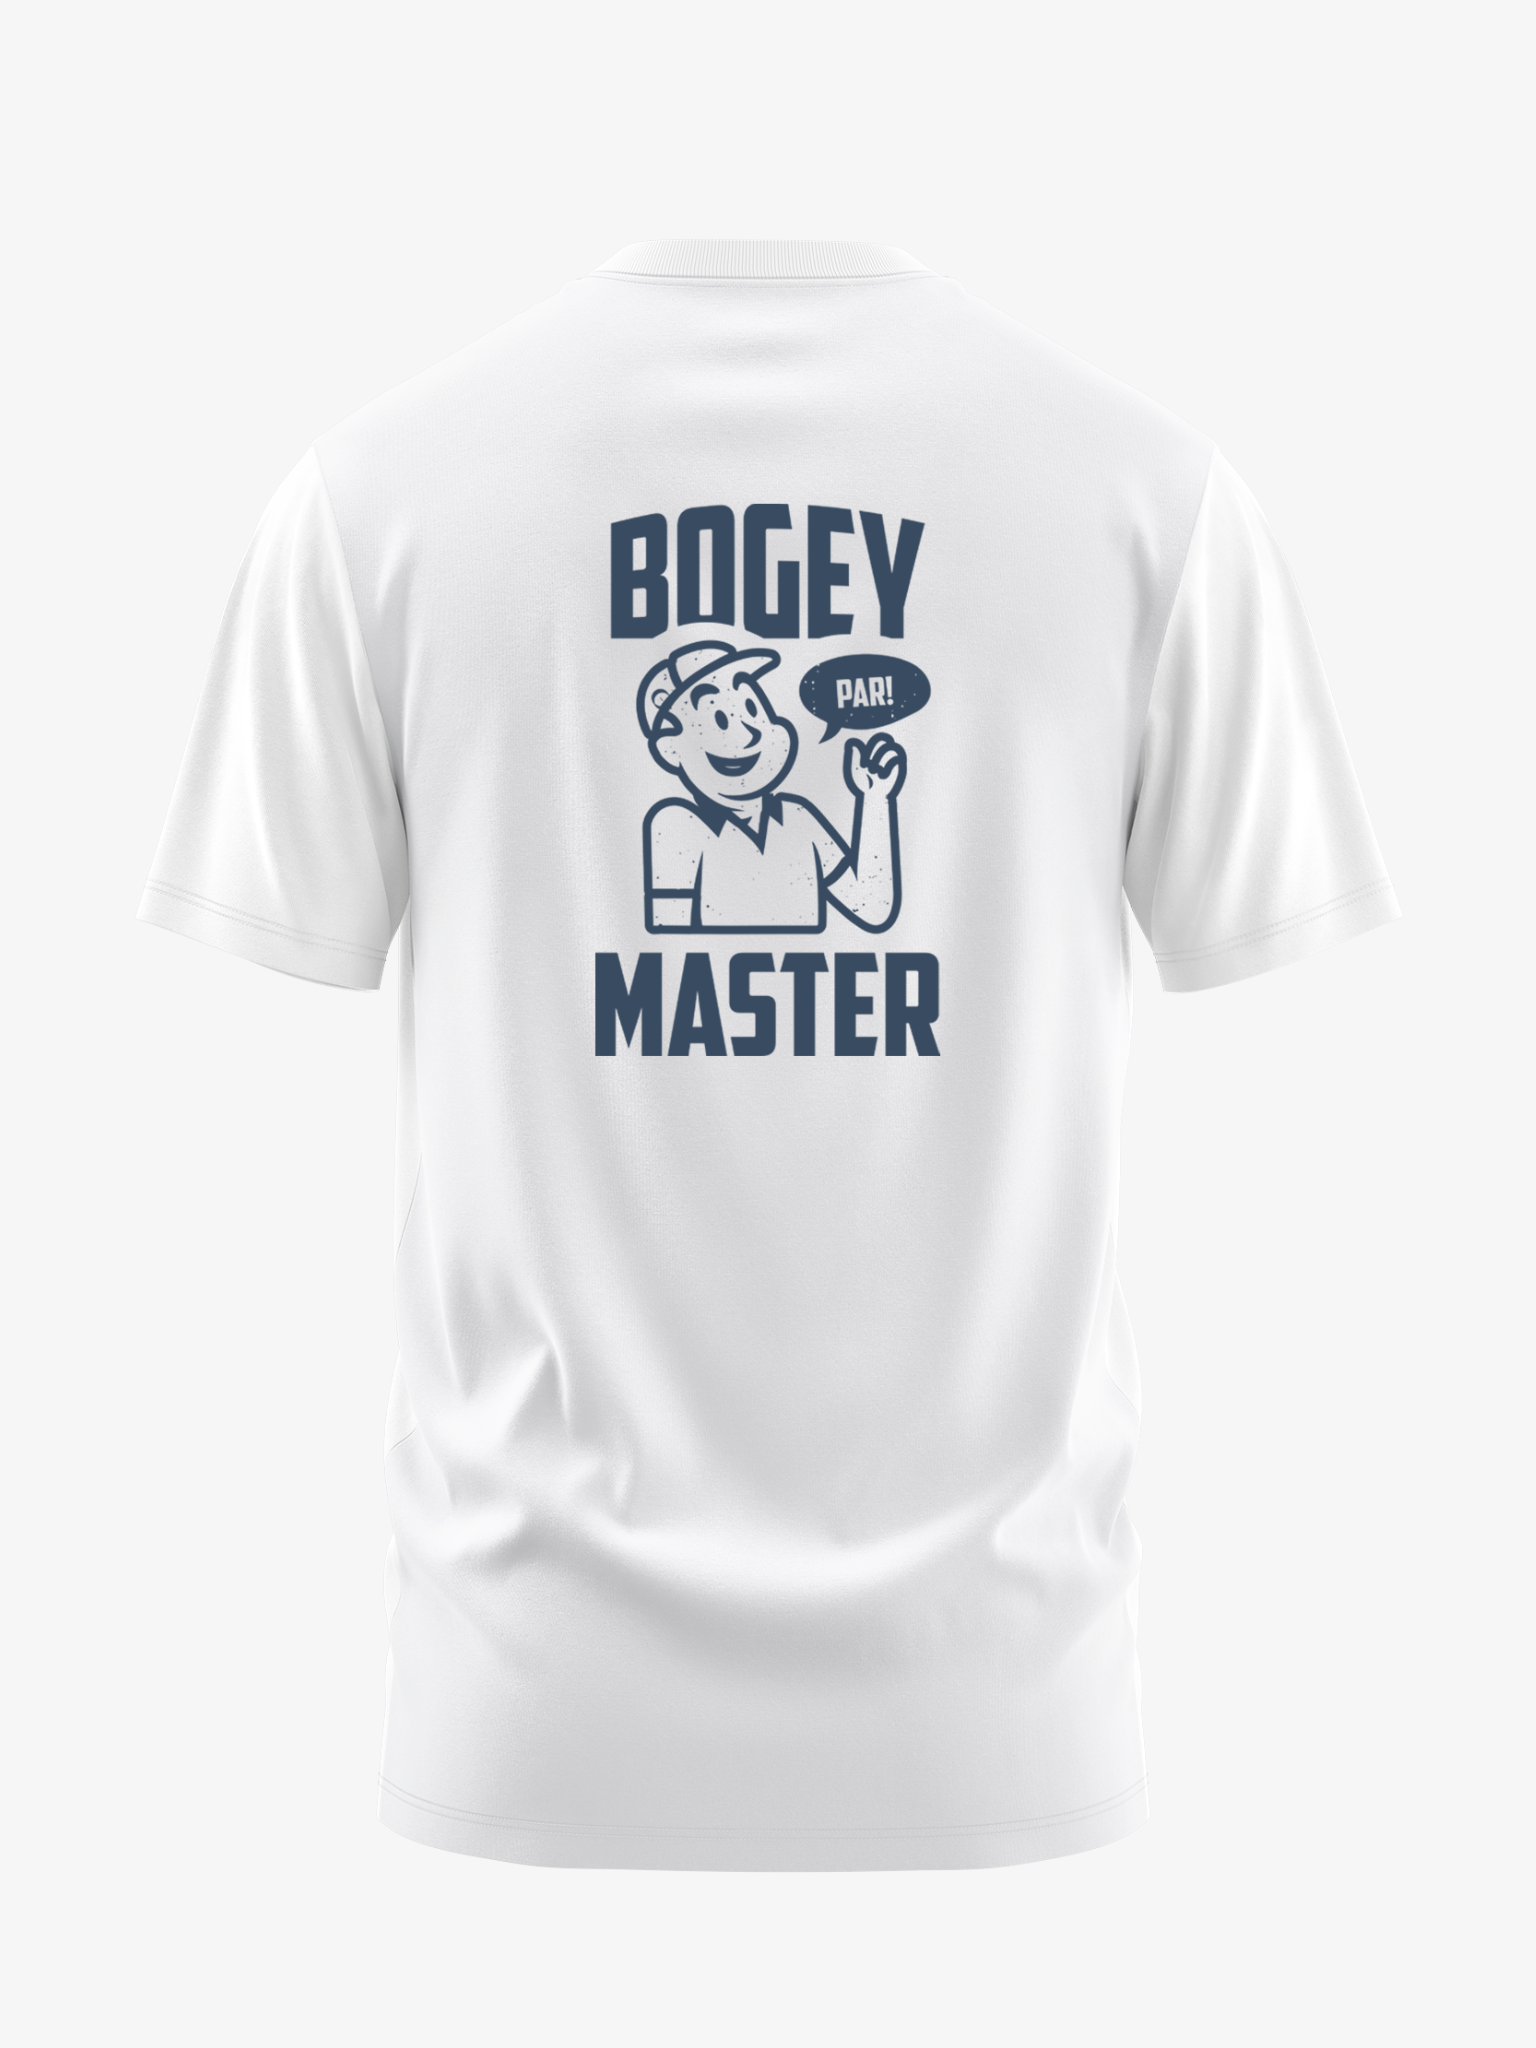 T-shirt Maître Bogey